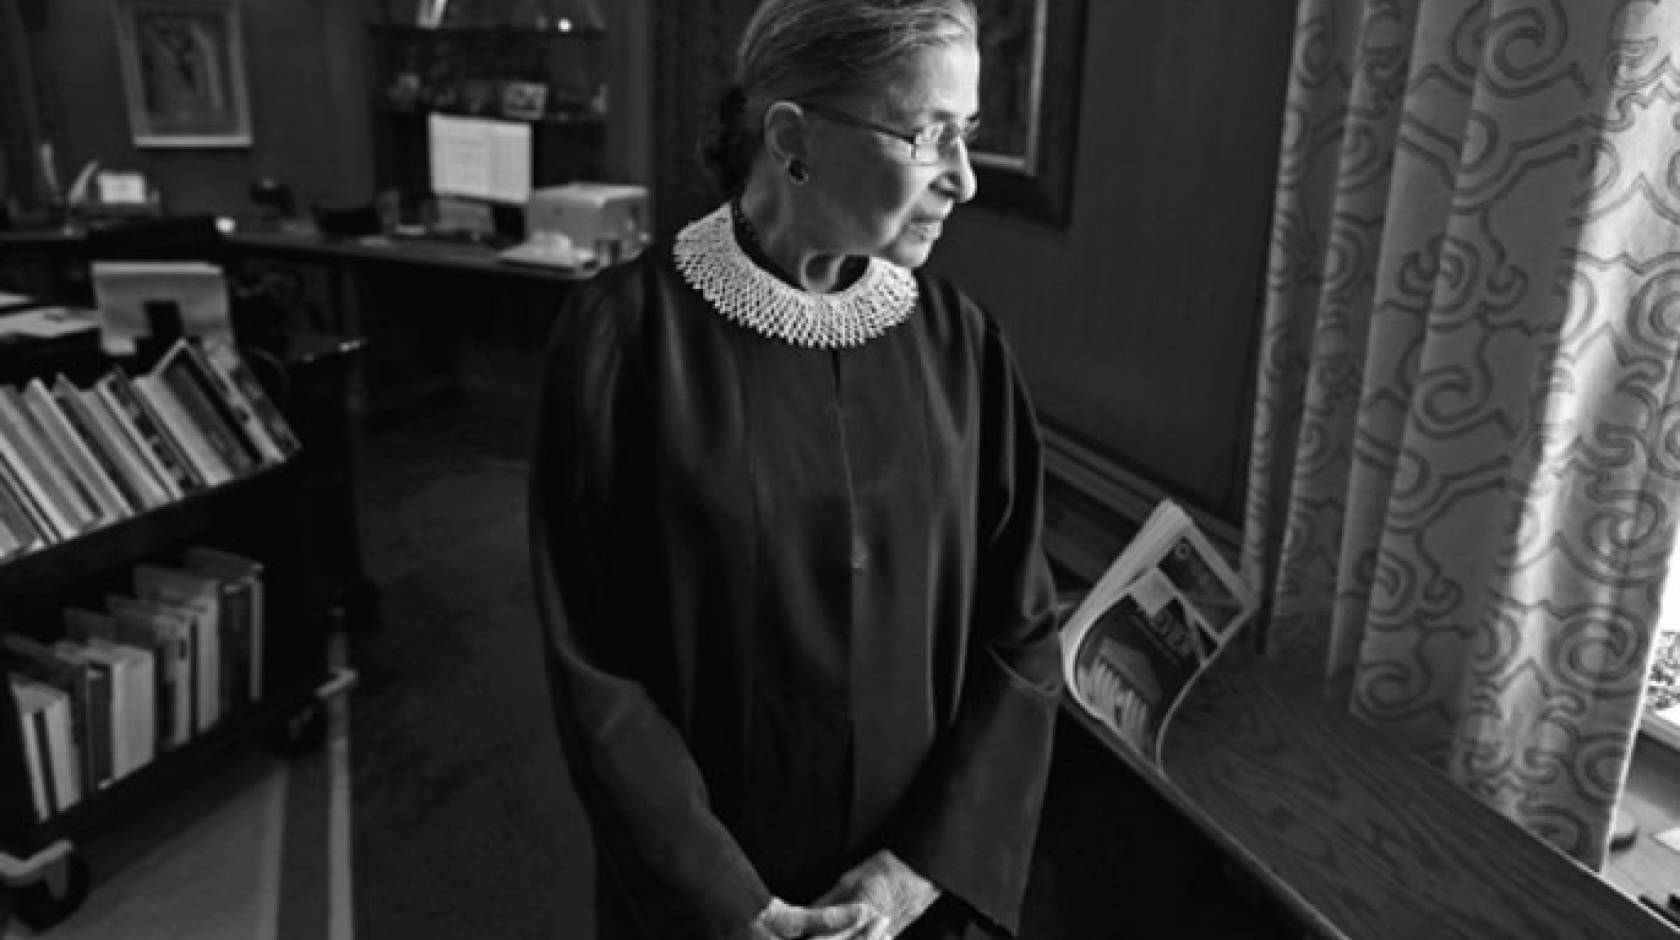 Ruth Bader Ginsburg in SCOTUS robe